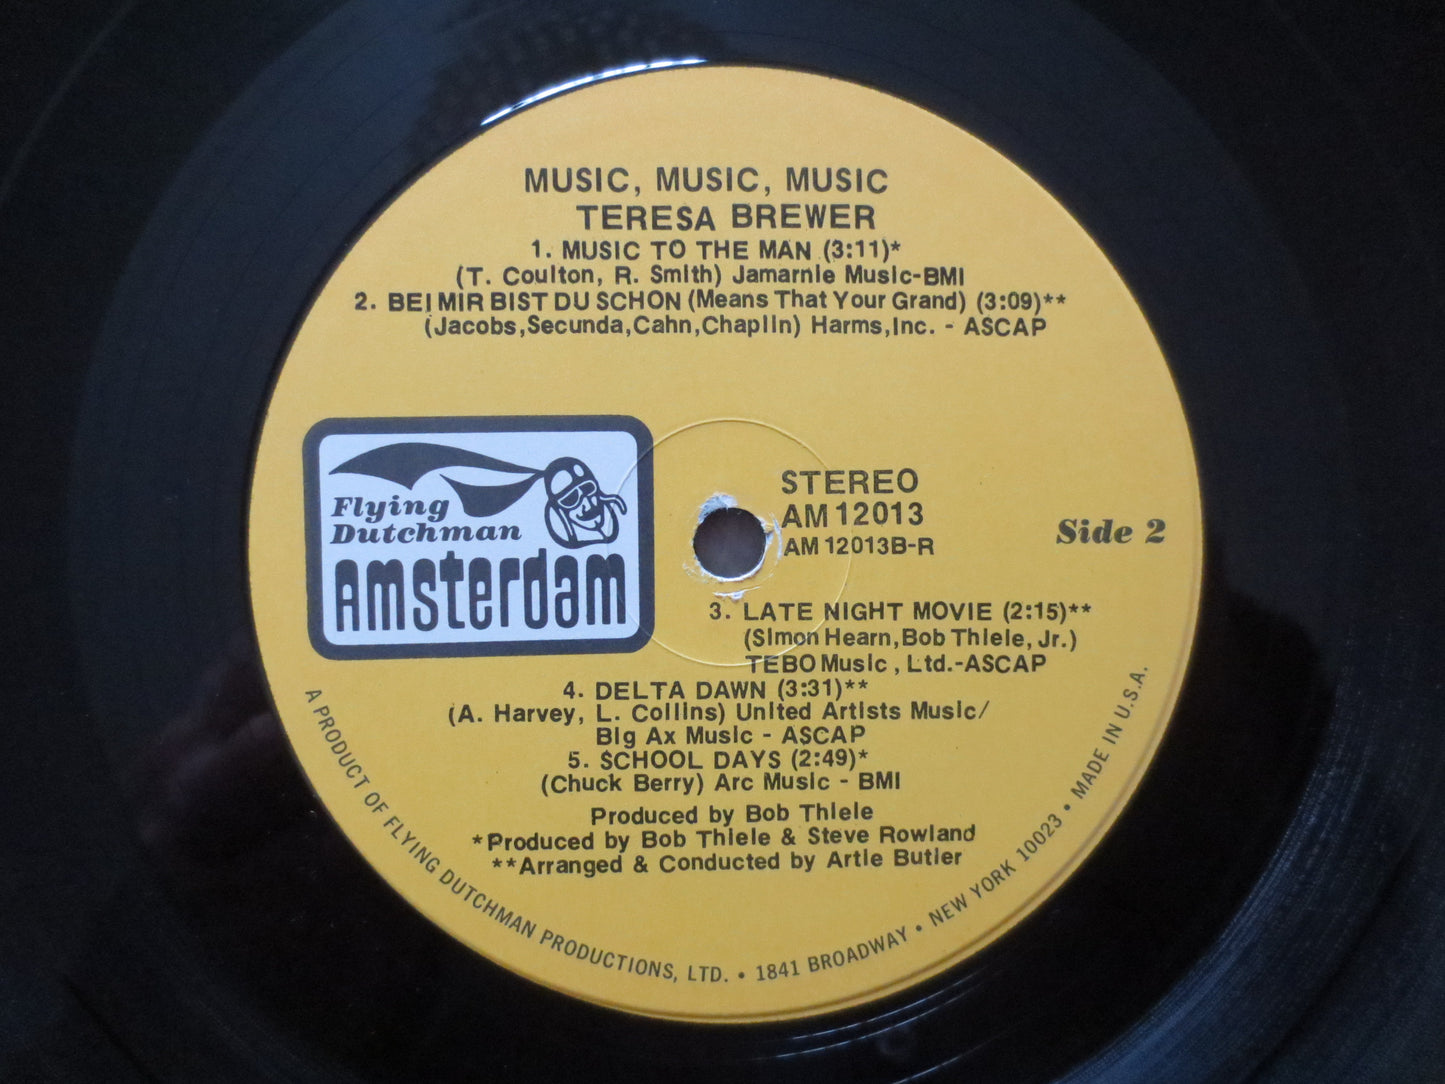 TERESA BREWER,MUSIC Album, Teresa Brewer Albums, Teresa Brewer Vinyl, Teresa Brewer Lp, Vintage Vinyl, 1973 Records